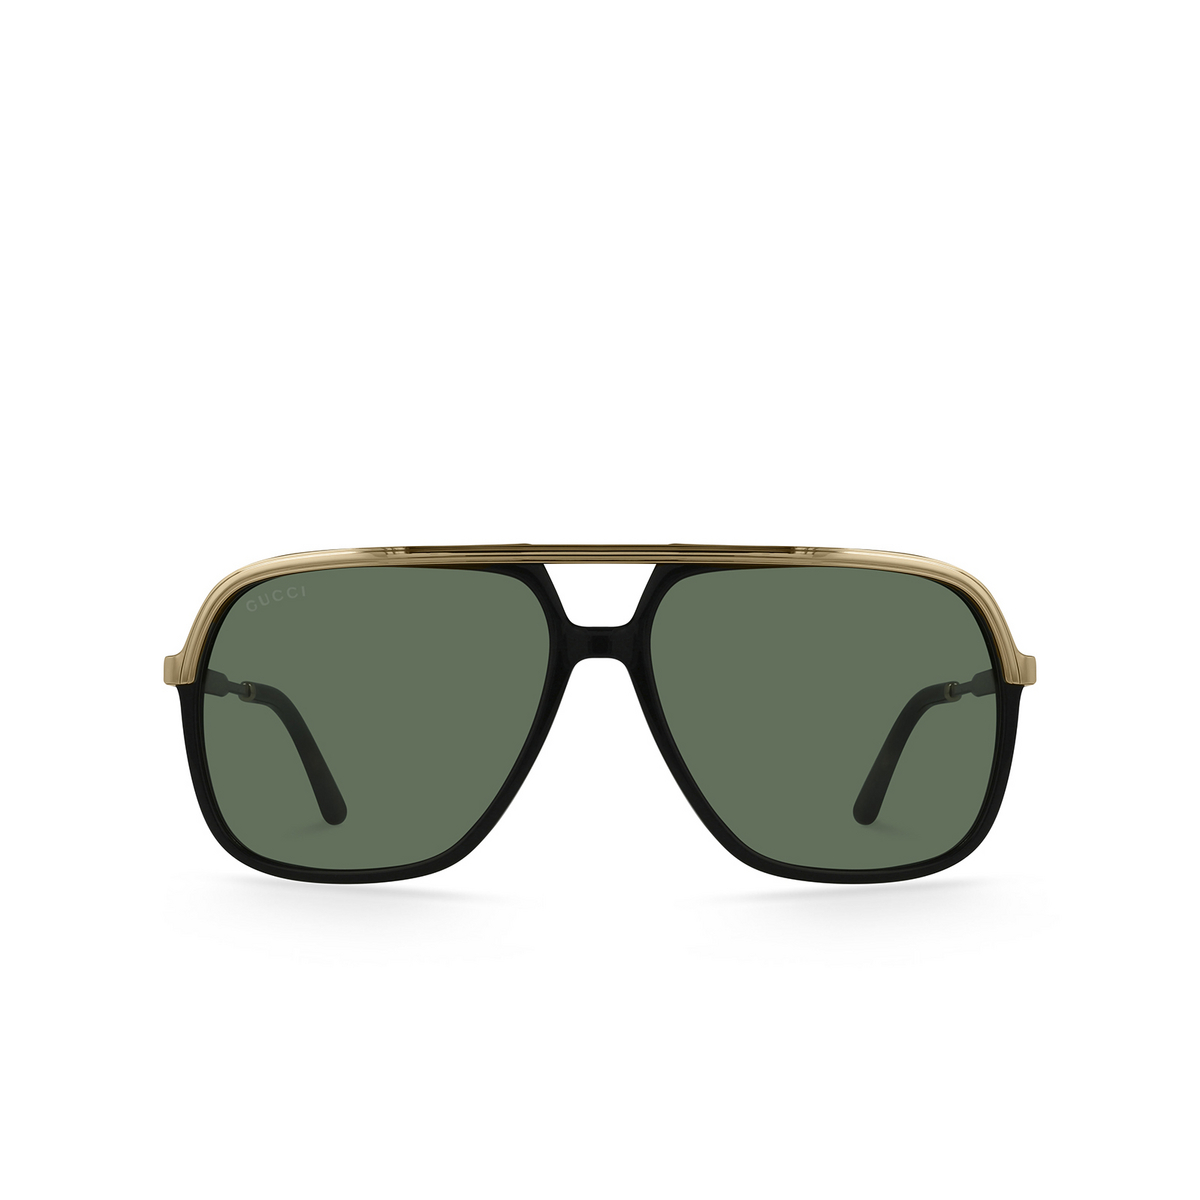 Gucci GG0200S Sunglasses 001 Black & Gold - front view